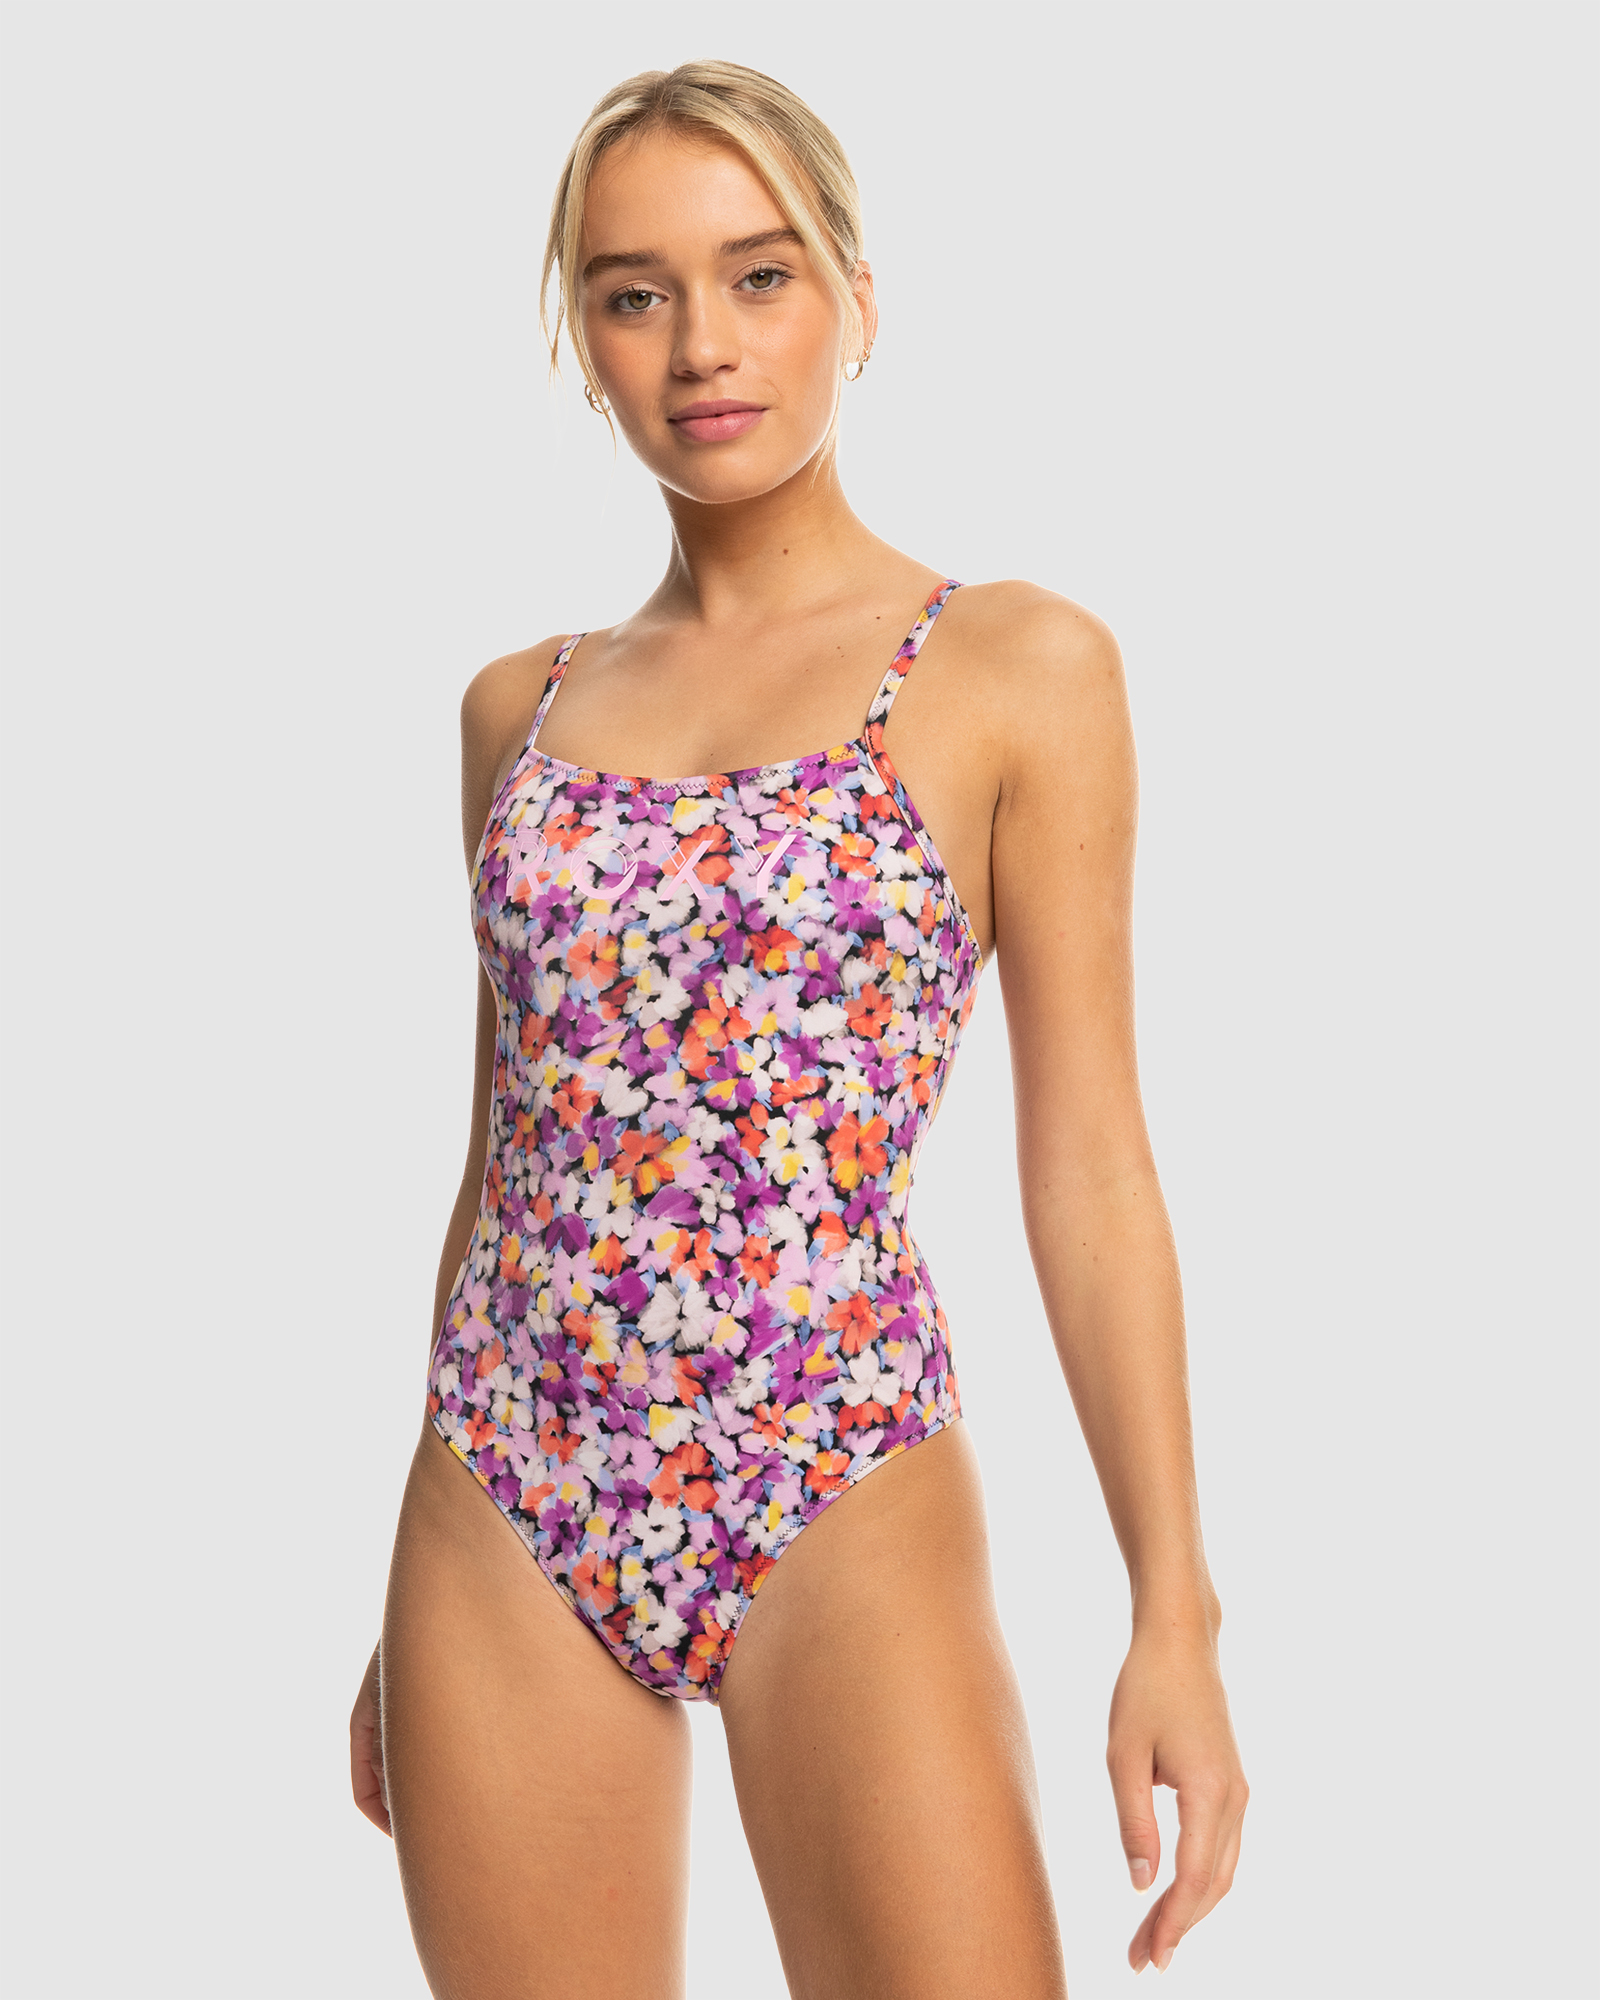 ROXY ACTIVE BASIC ONE PIECE - Shop Women's Swimwear Online - Free NZ  Shipping Over $70